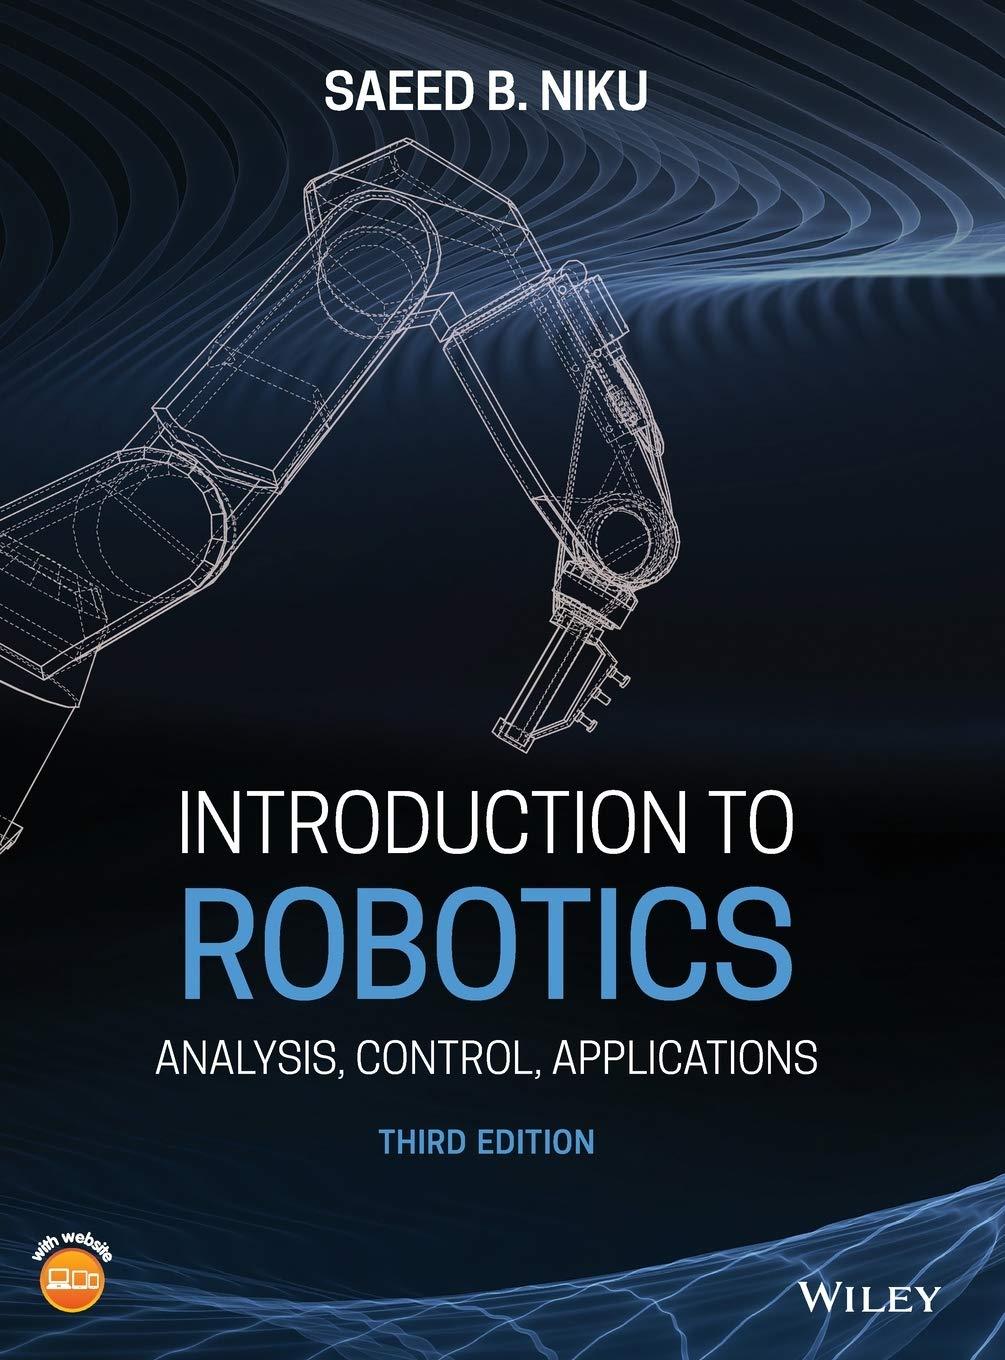 introduction to robotics analysis control applications 3rd edition saeed b. niku 1119527627, 978-1119527626